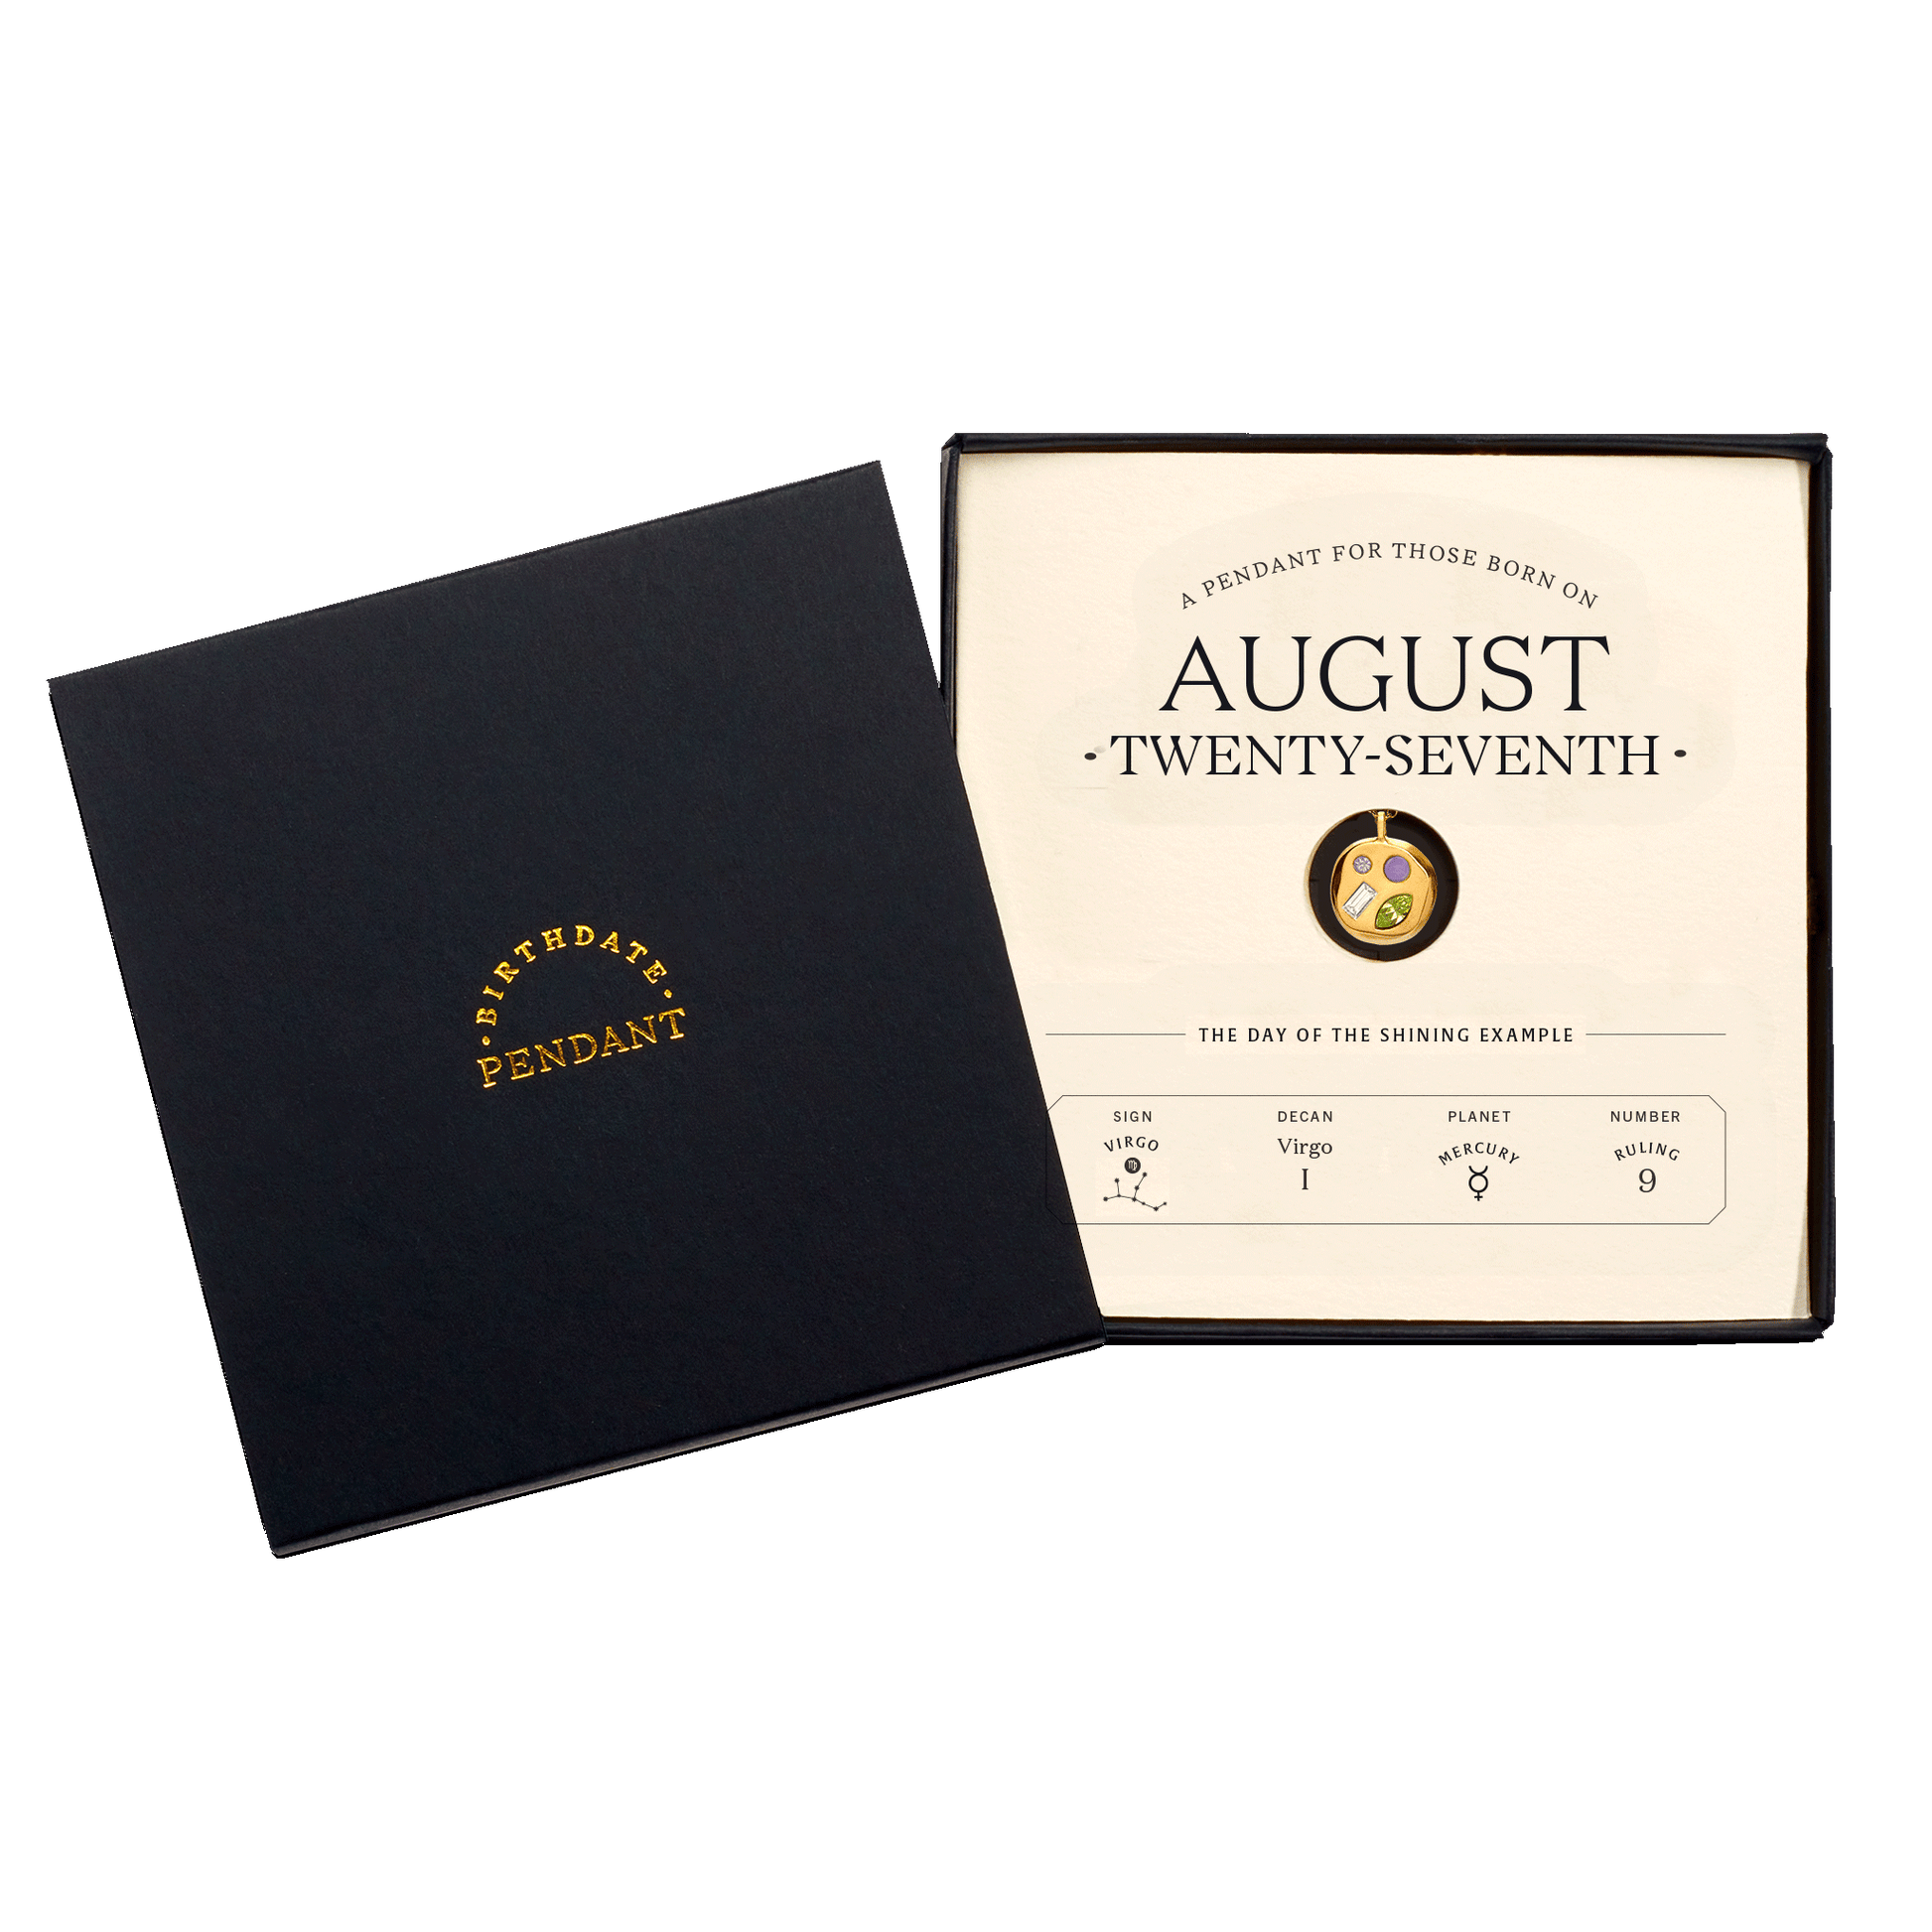 The August Twenty-Seventh Pendant inside its box